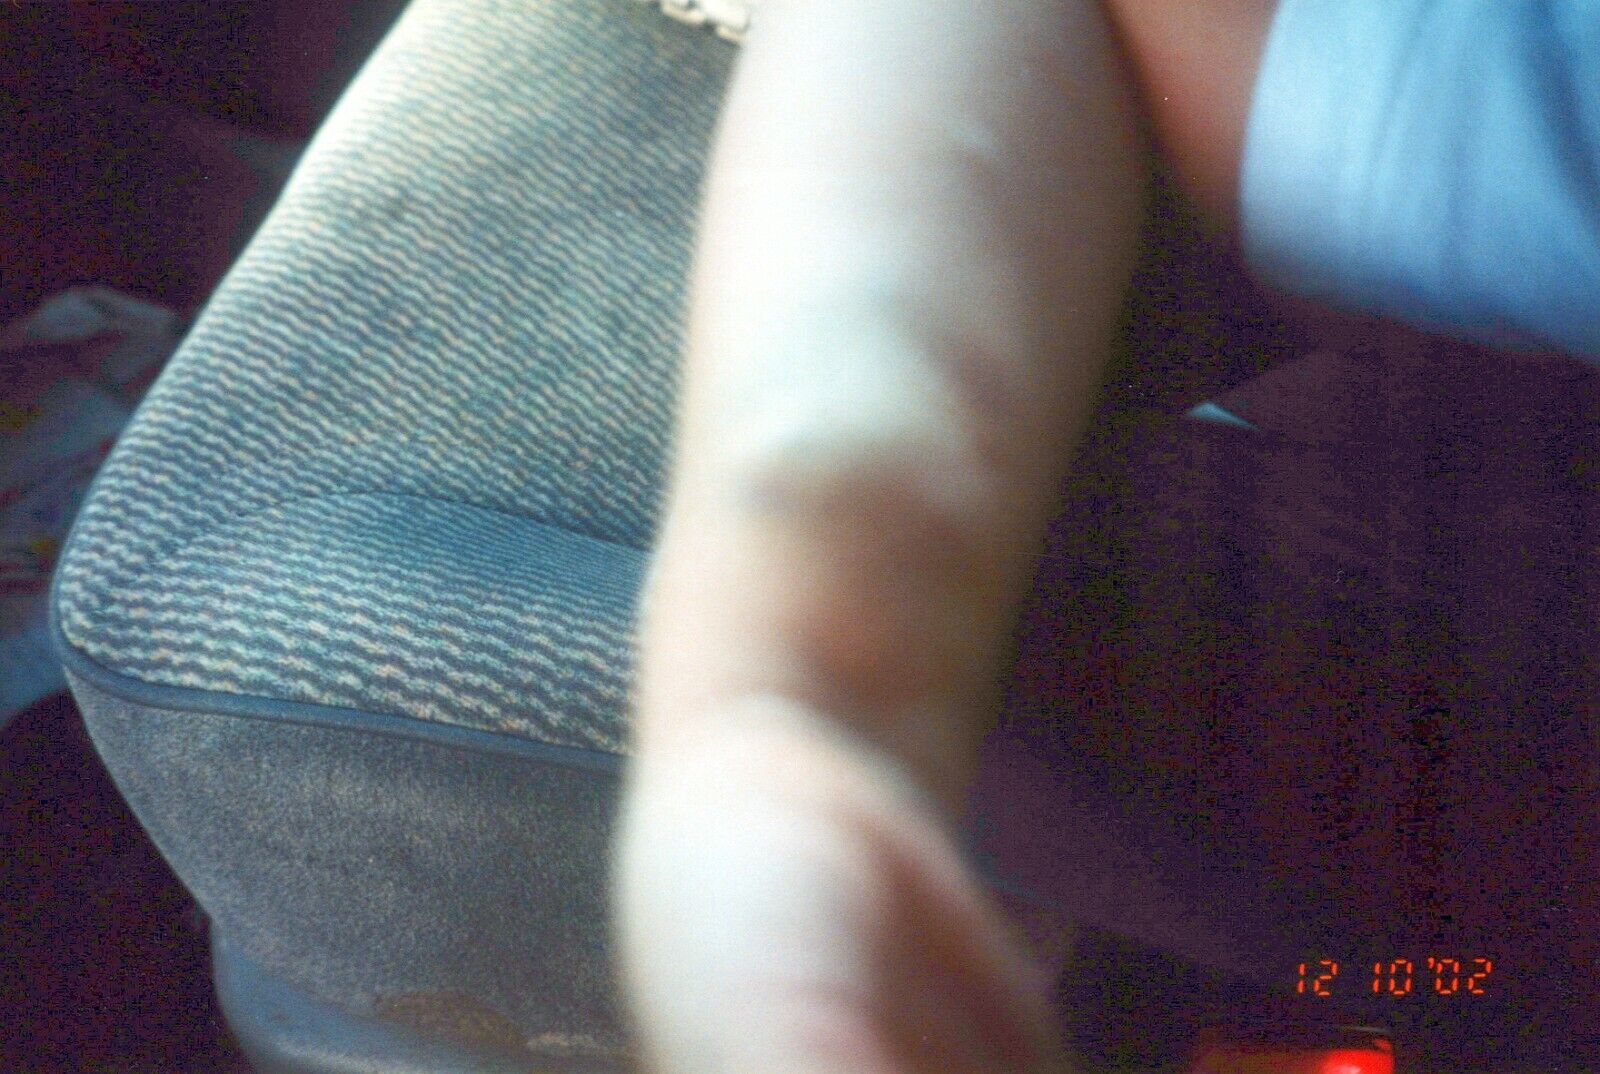 2000\'s Found Photo - Strange Weird Odd Picture Of Kids Arm With A Rash Disease